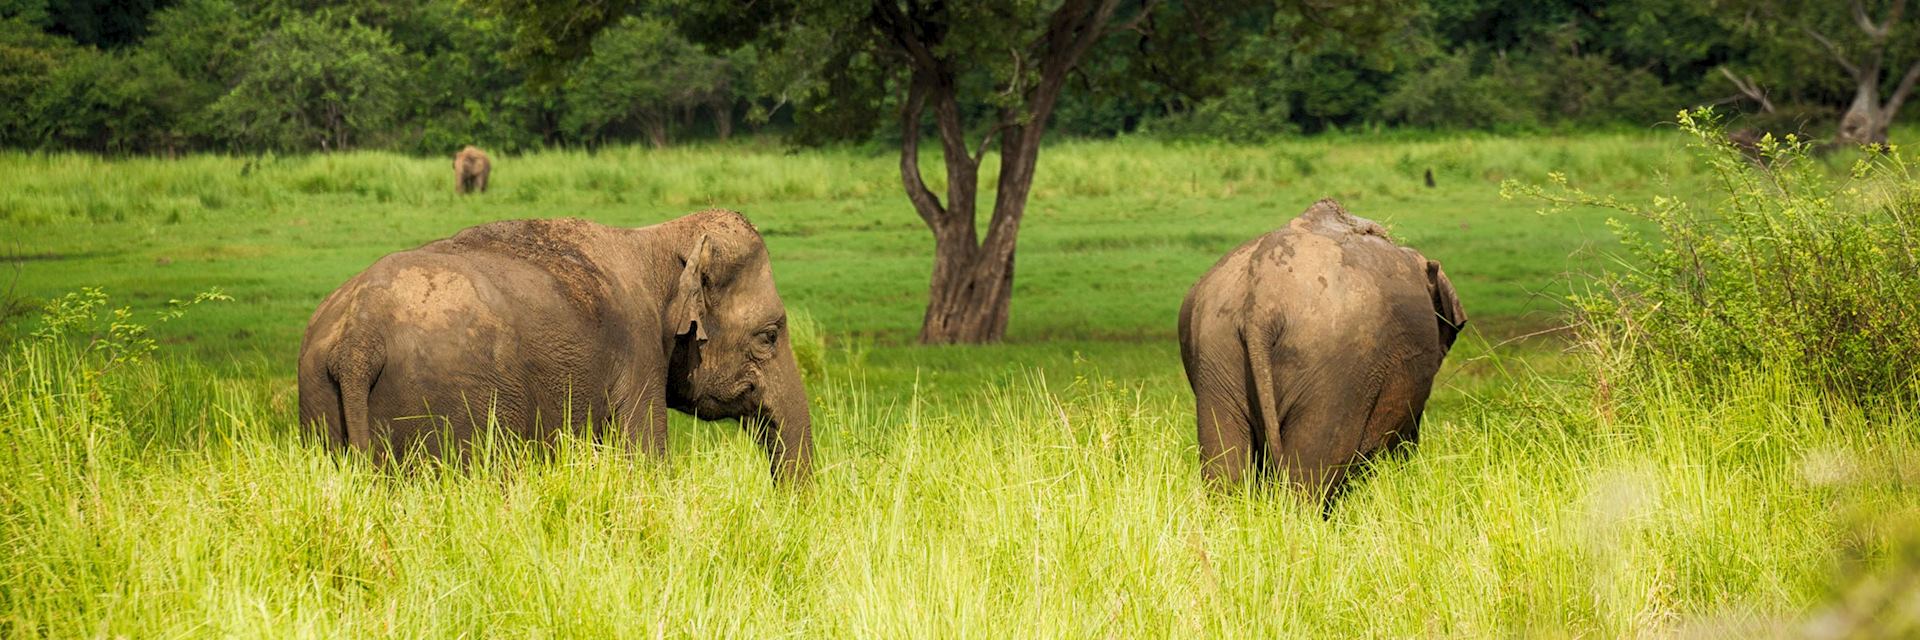 Elephants in Minneriya National Park